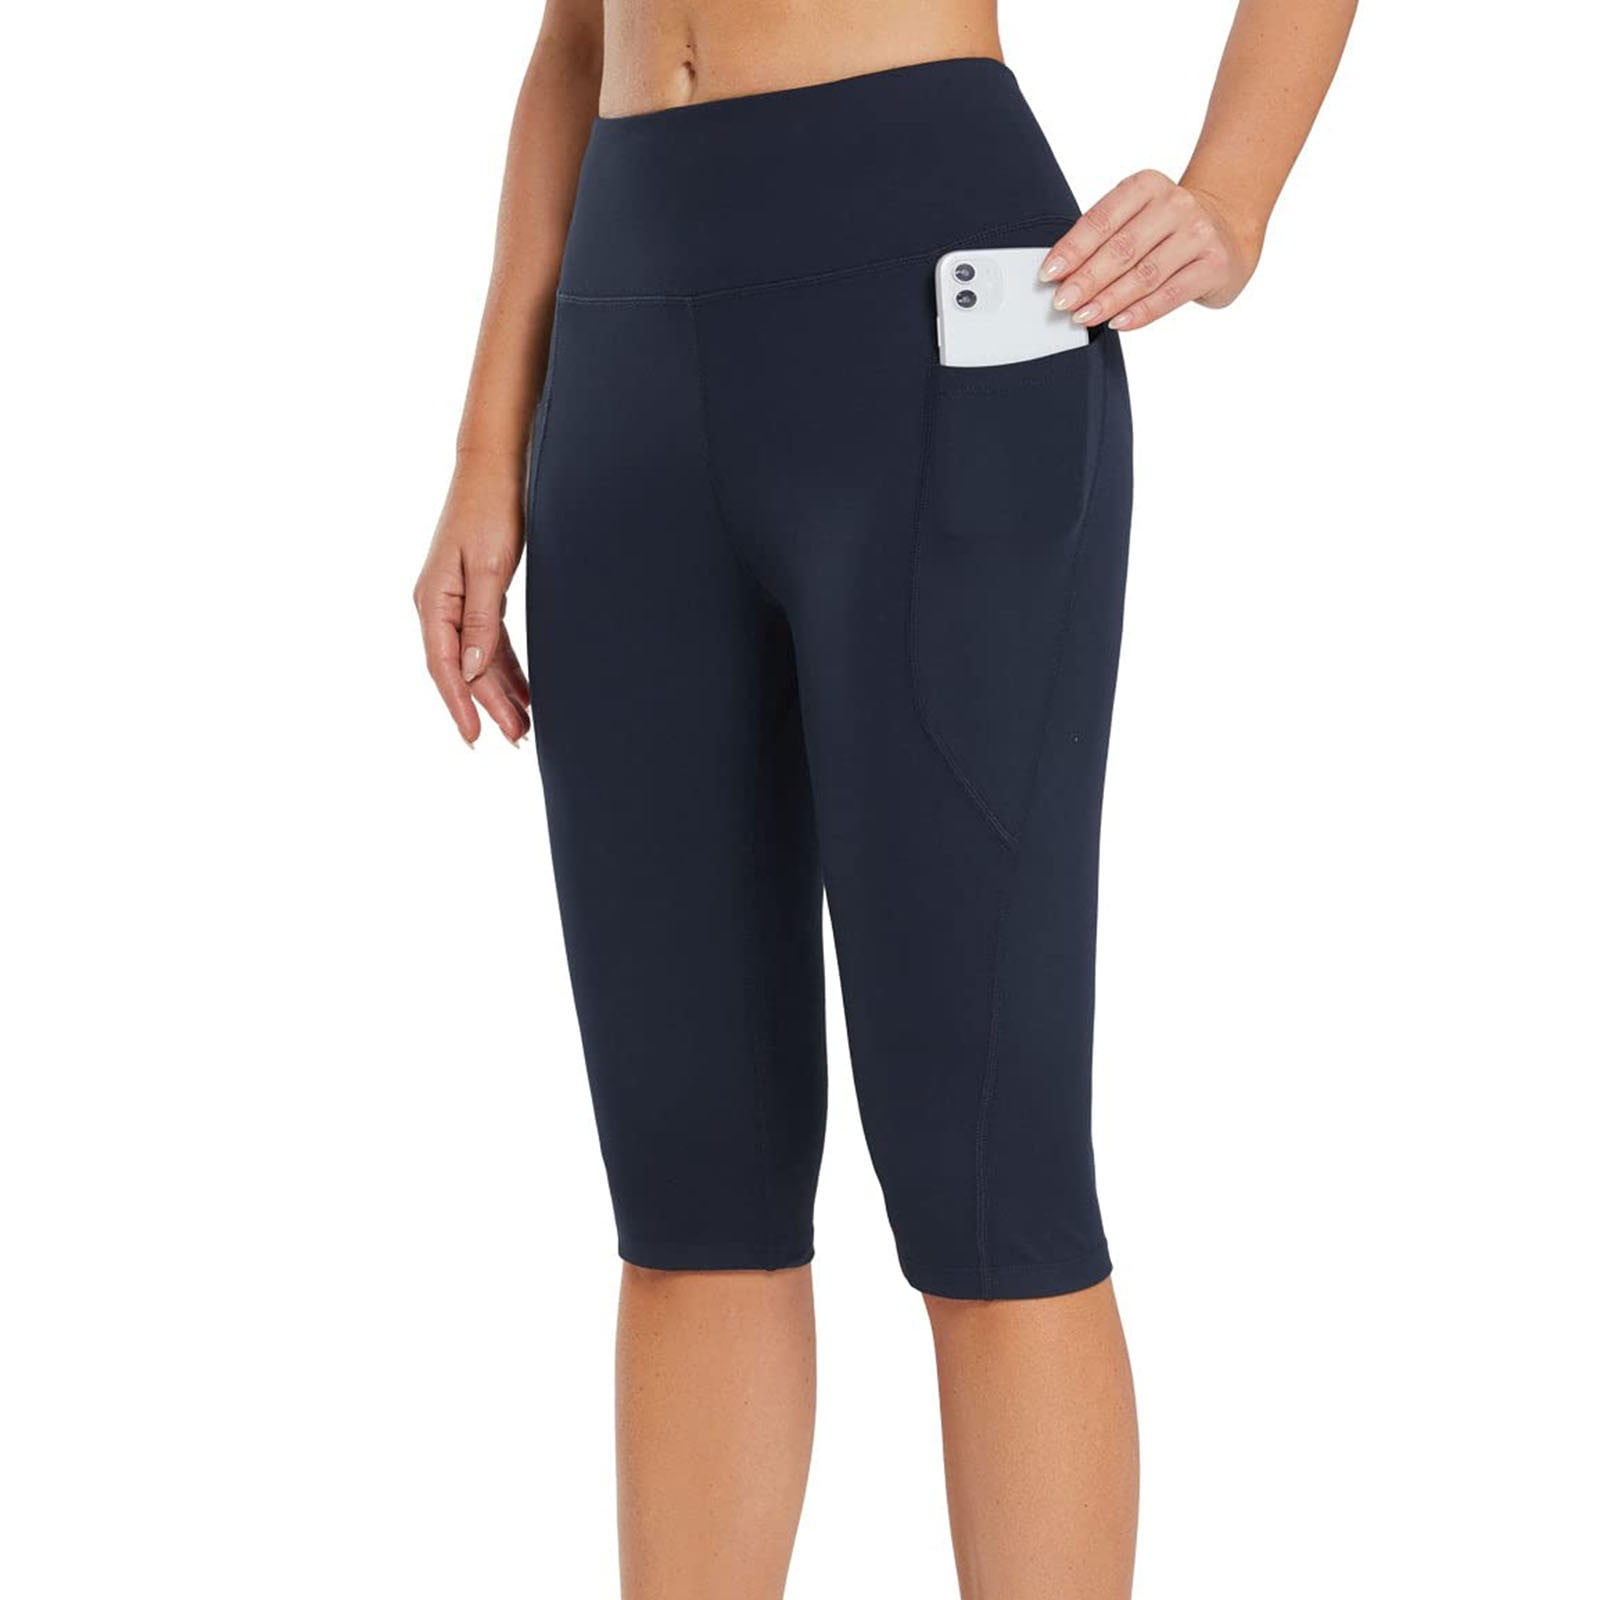 Athletic Joggers Women Sweatpants With Pockets Workout Leggings Yoga Pants  For Women Black XS